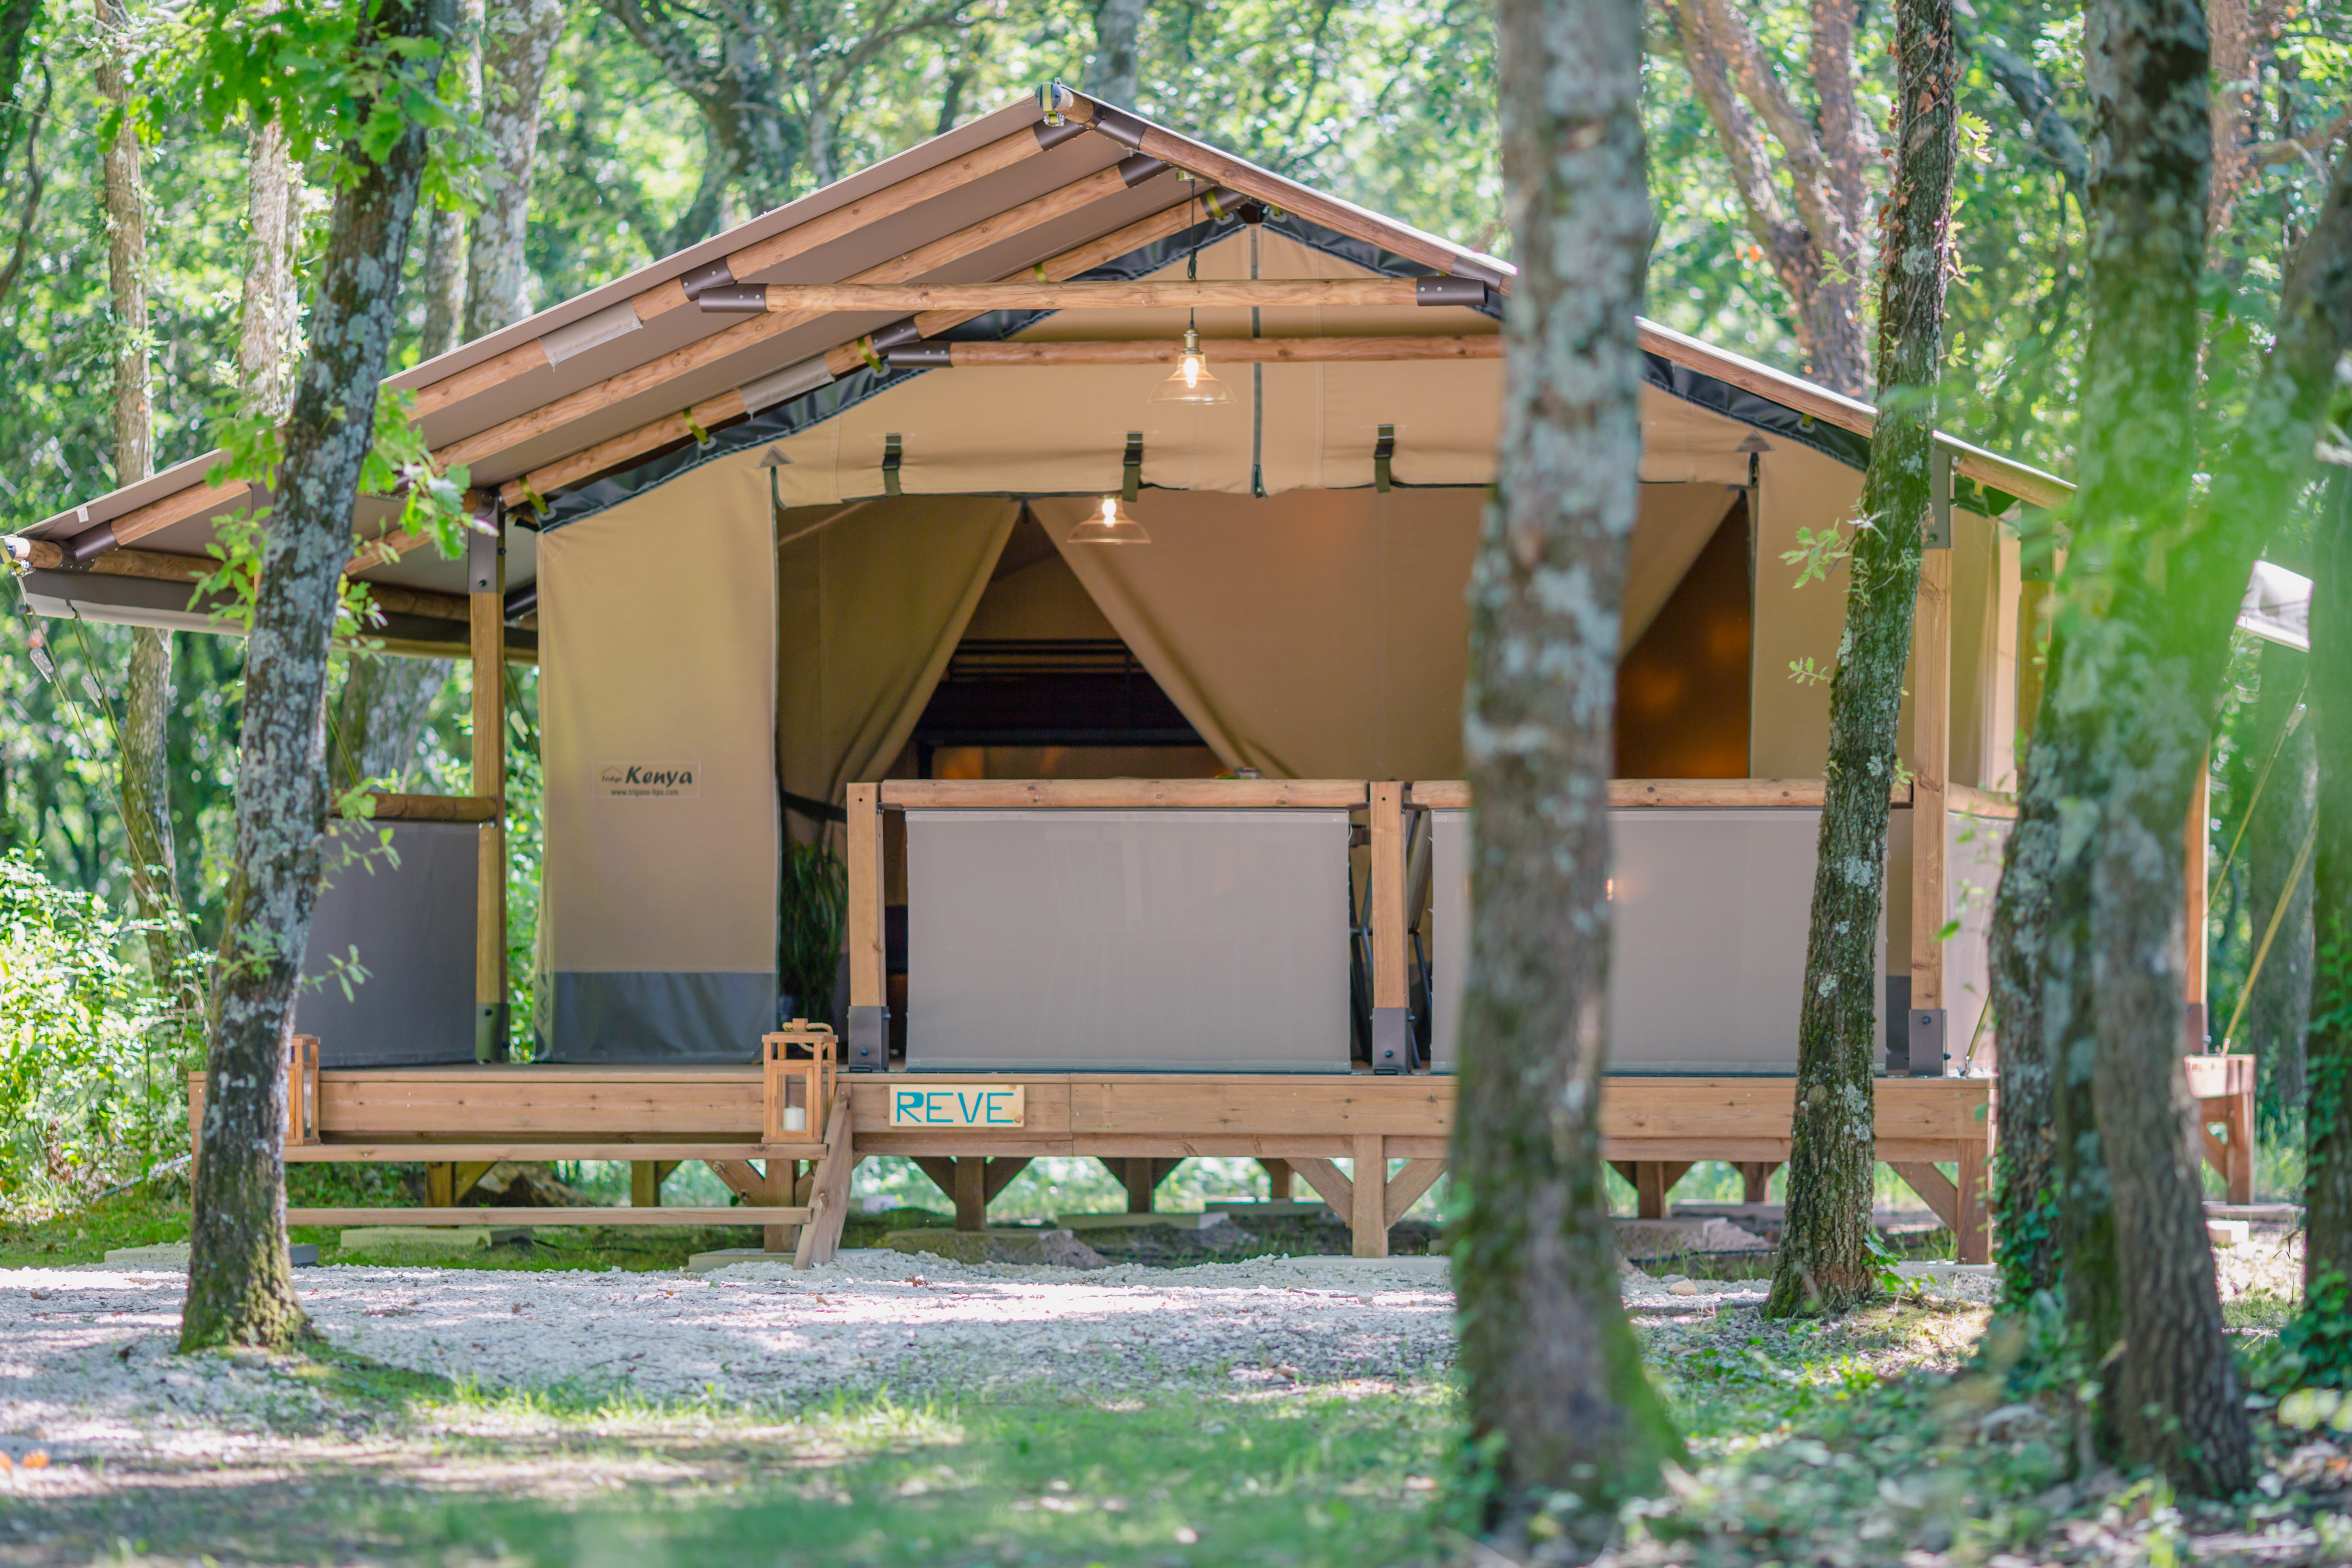 Location - Lodge Kenya 34 M², 2 Chambres (4 À 5 Personnes) Wifi (1 Appareil) + Terrasse - Camping Les Tomasses